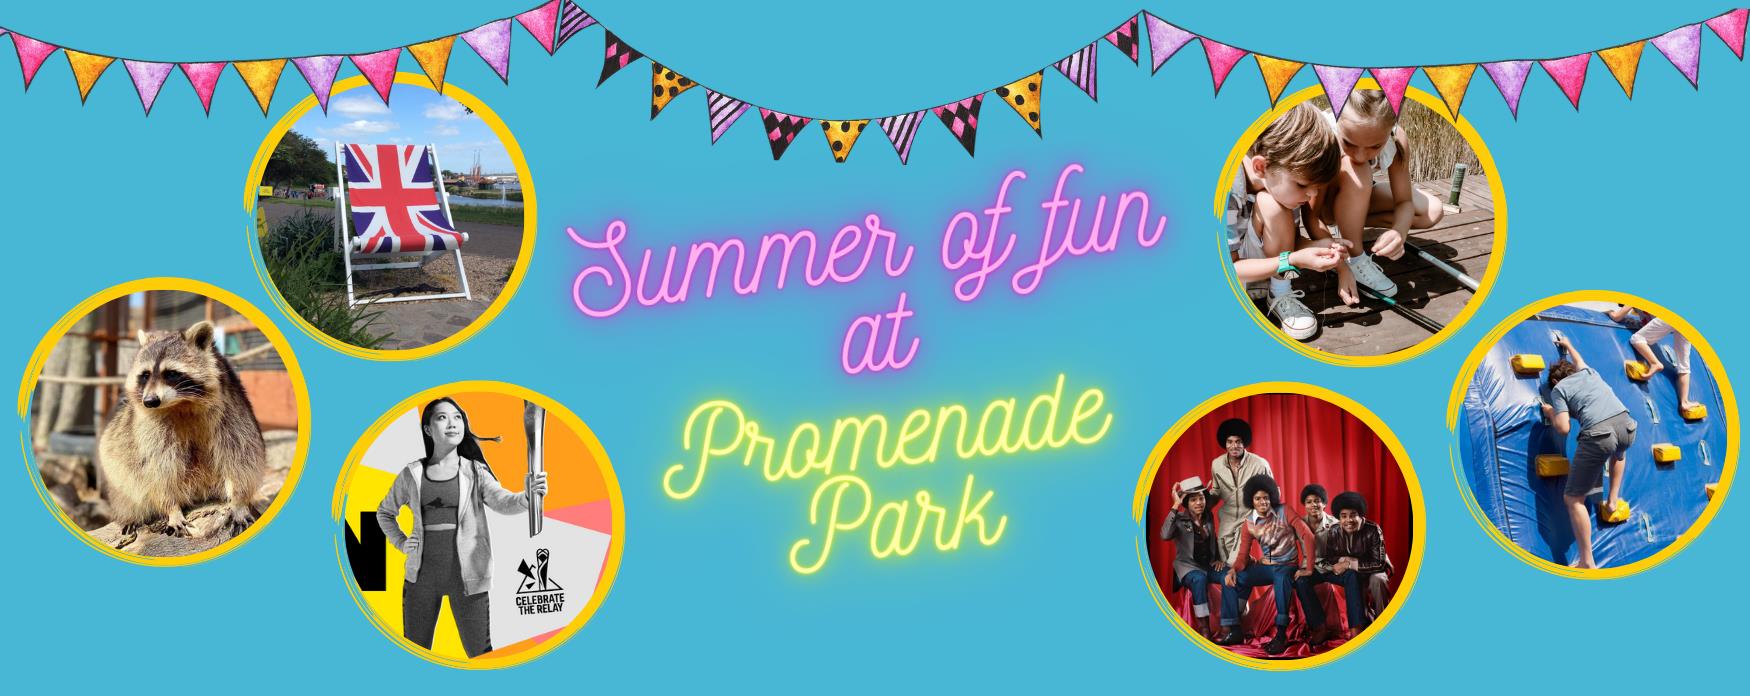 Promenade Park events